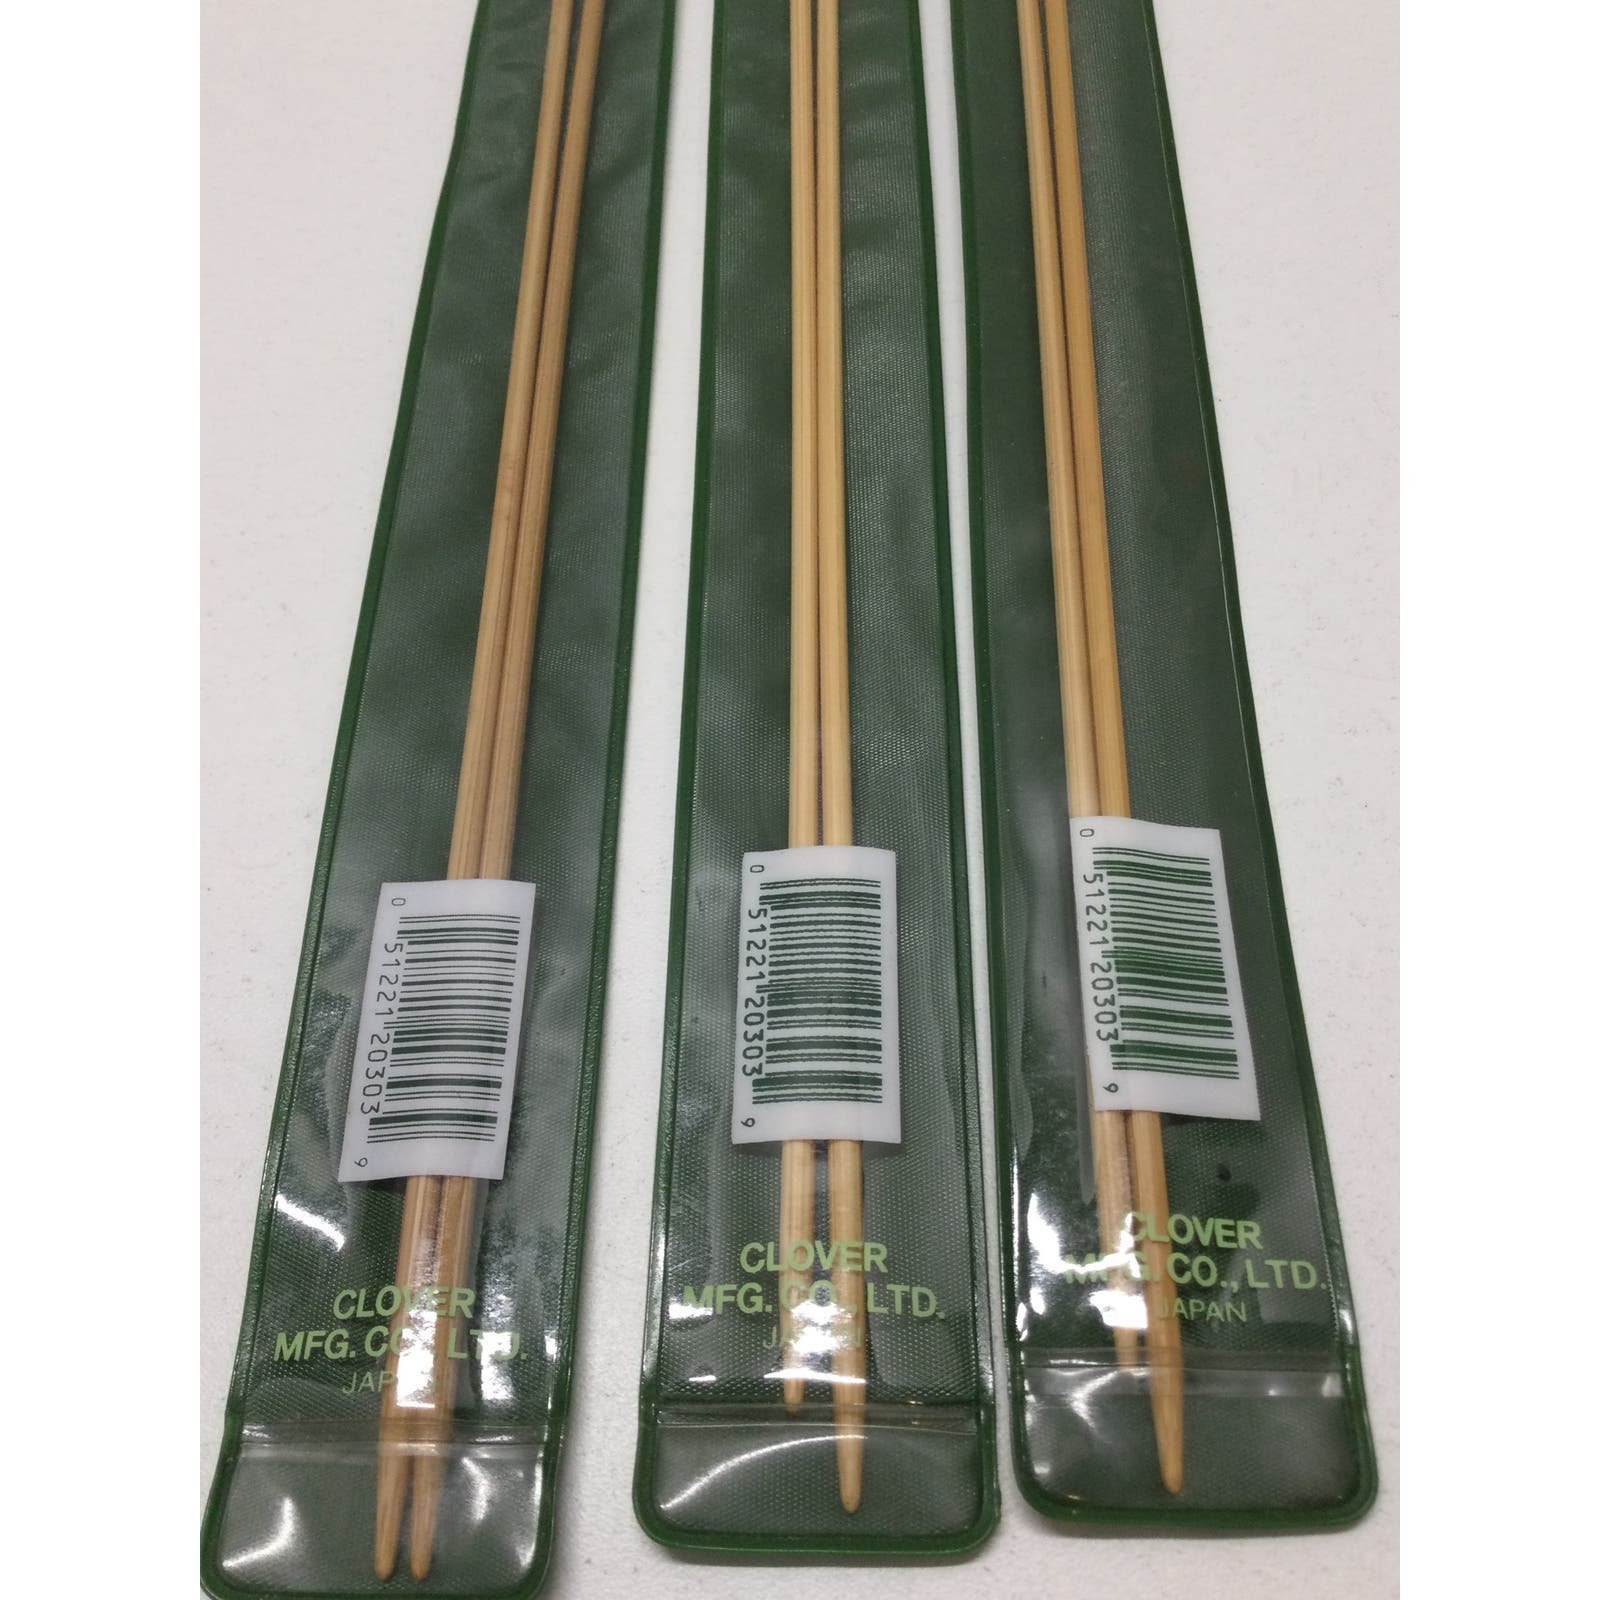 Lot of 3 Clover Takumi Bamboo Knitting Needles #3 (3.25mm) 13